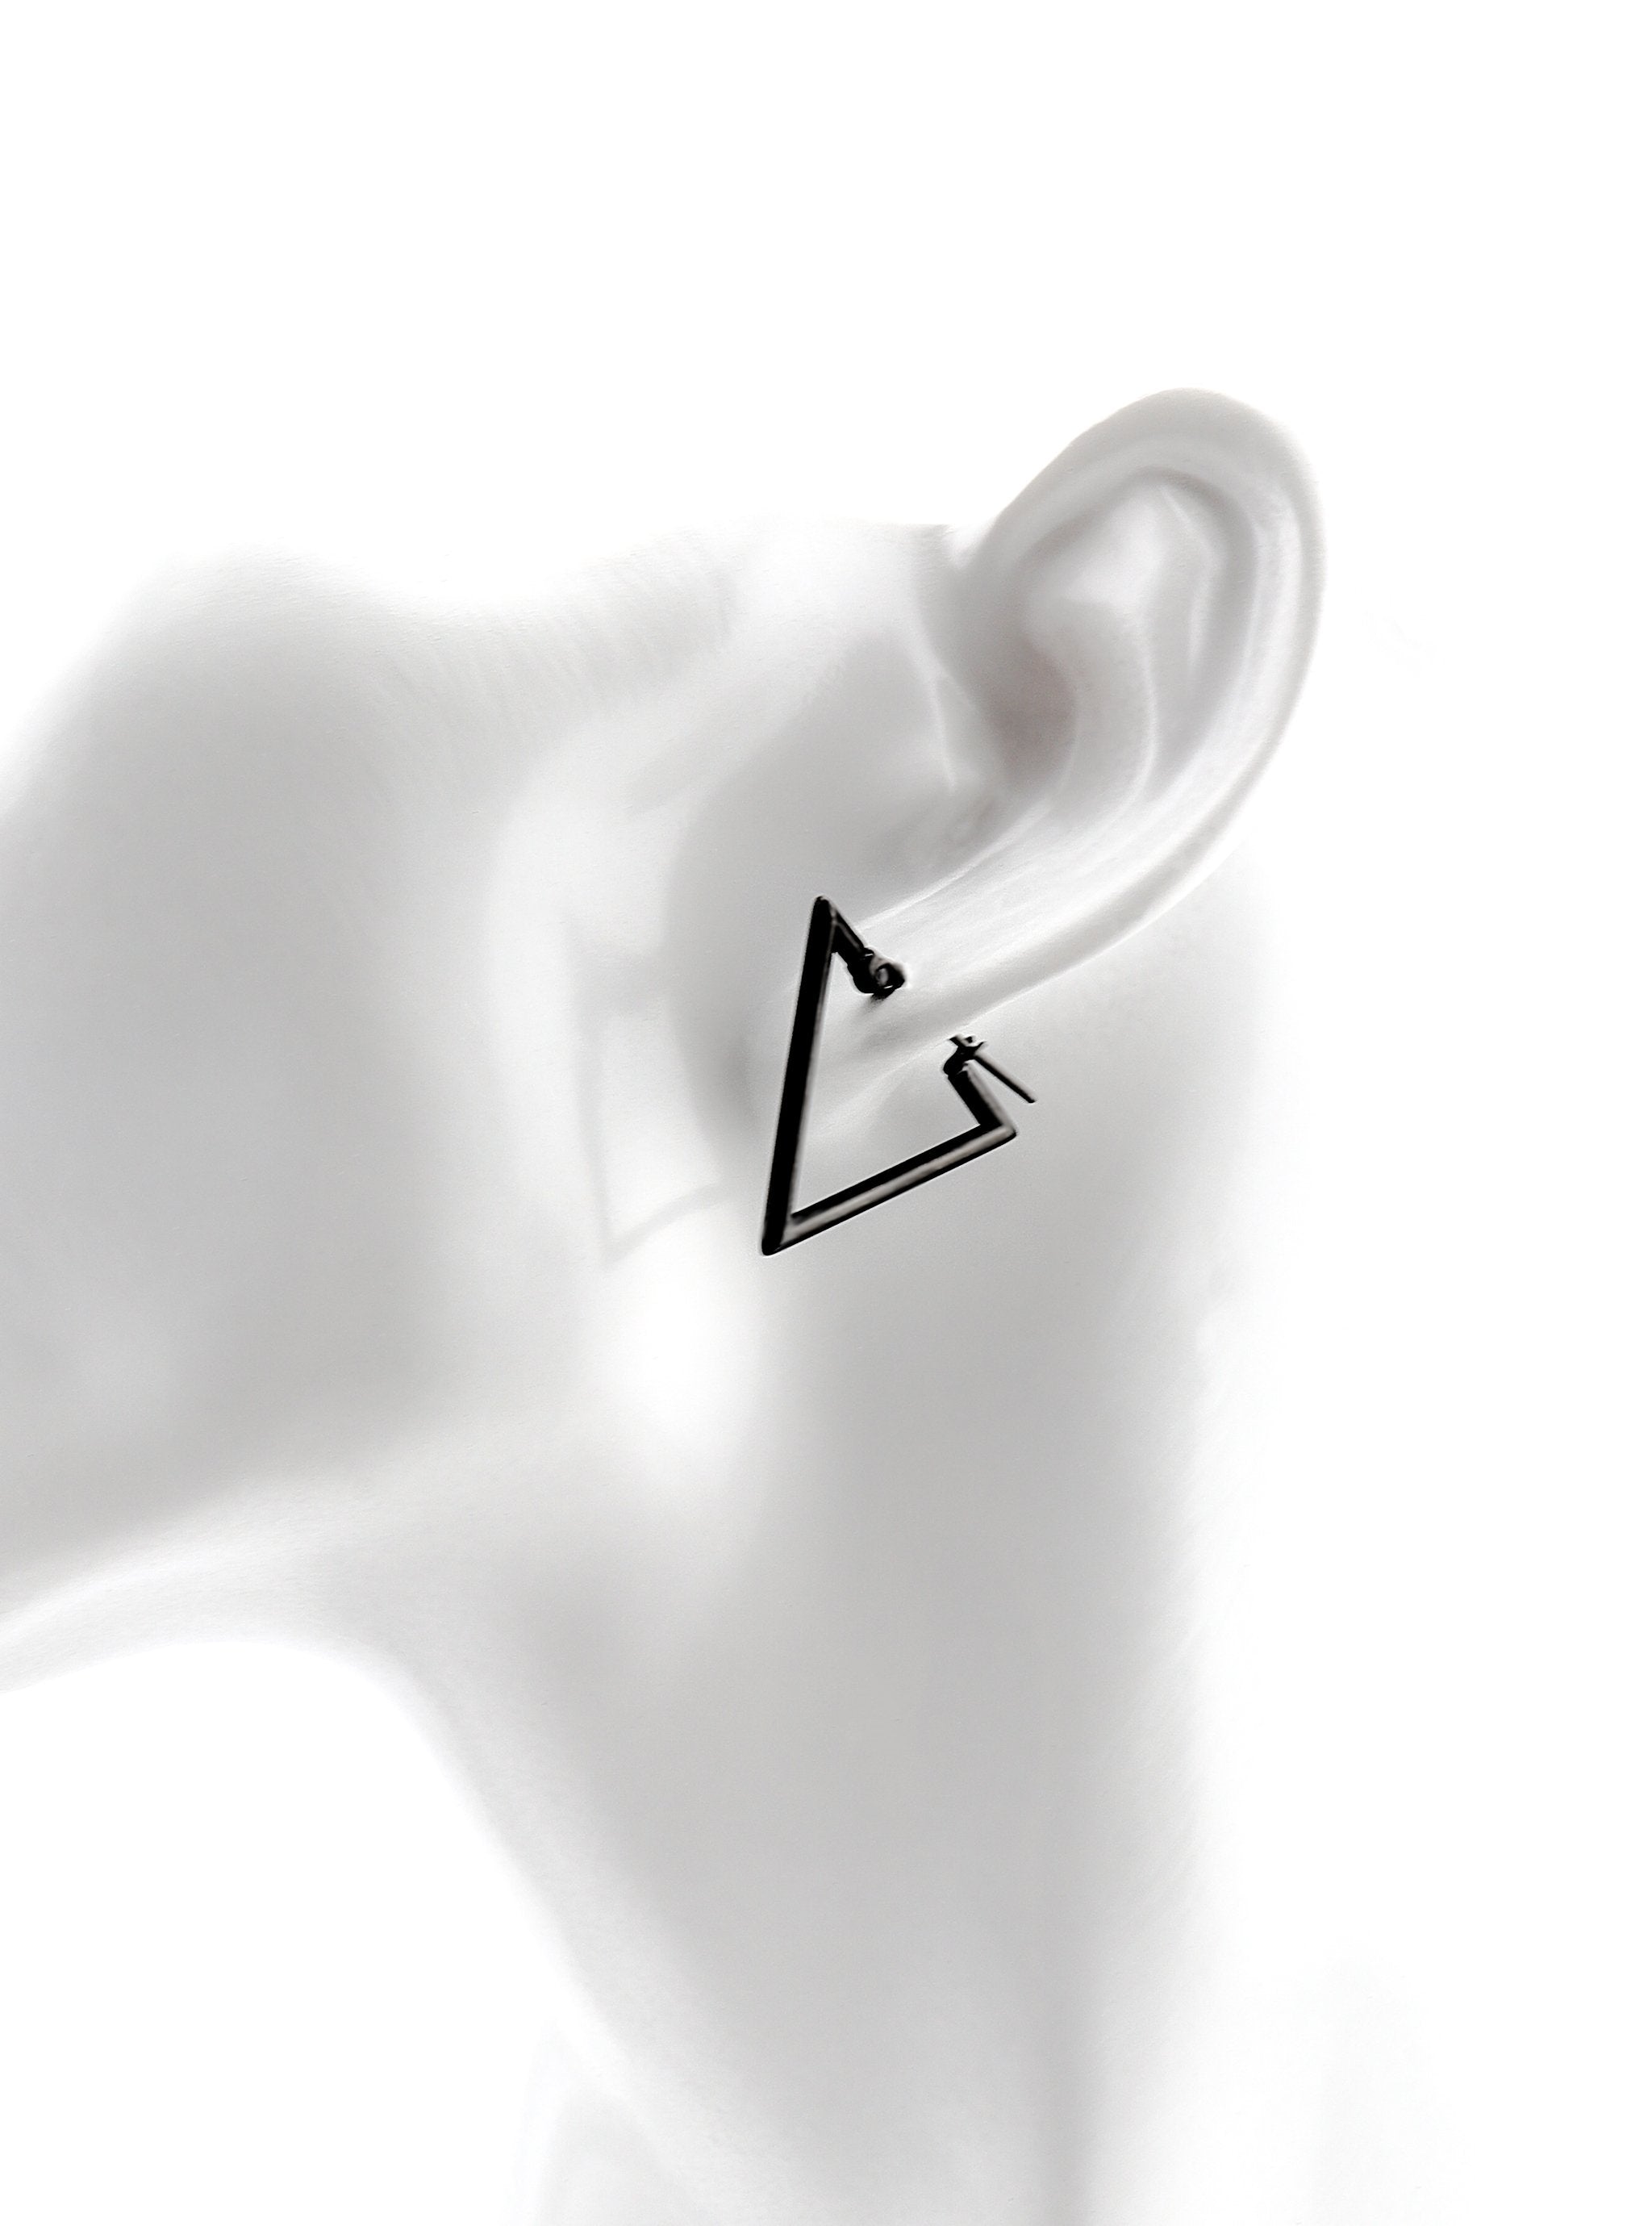 AERO EARRINGS - Simplique Mode